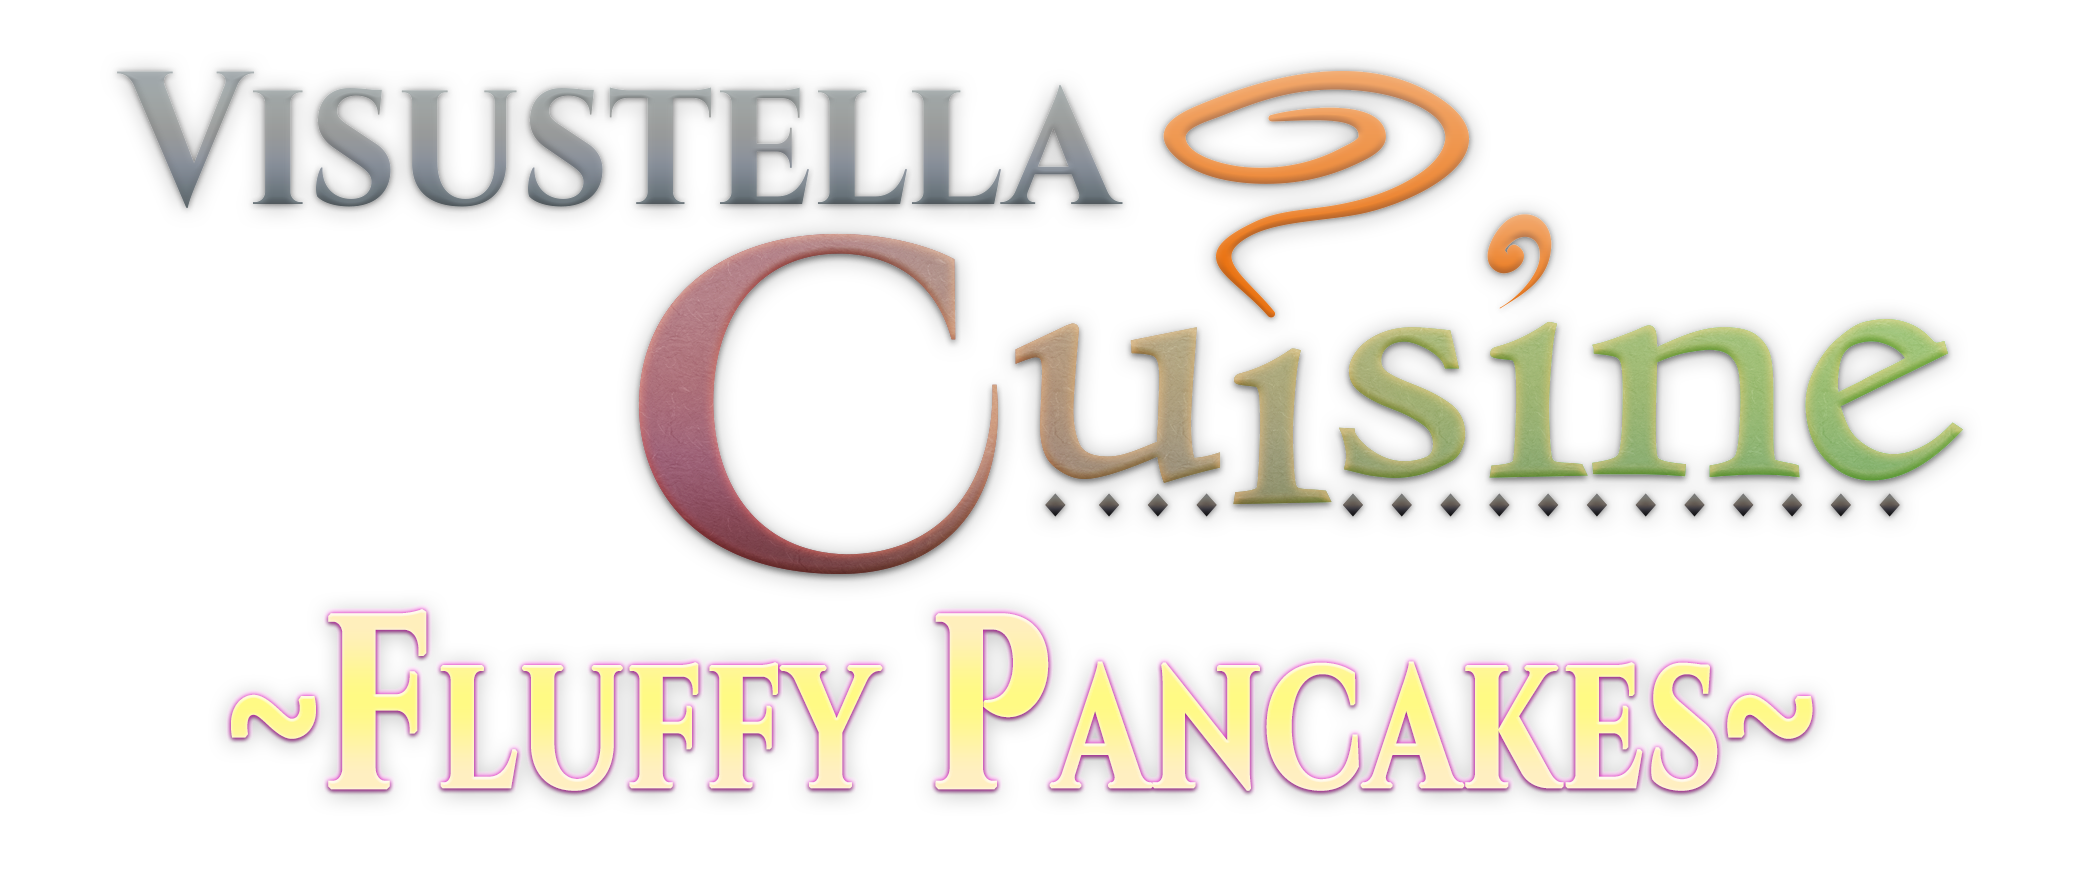 VisuStella Cuisine: Fluffy Pancakes